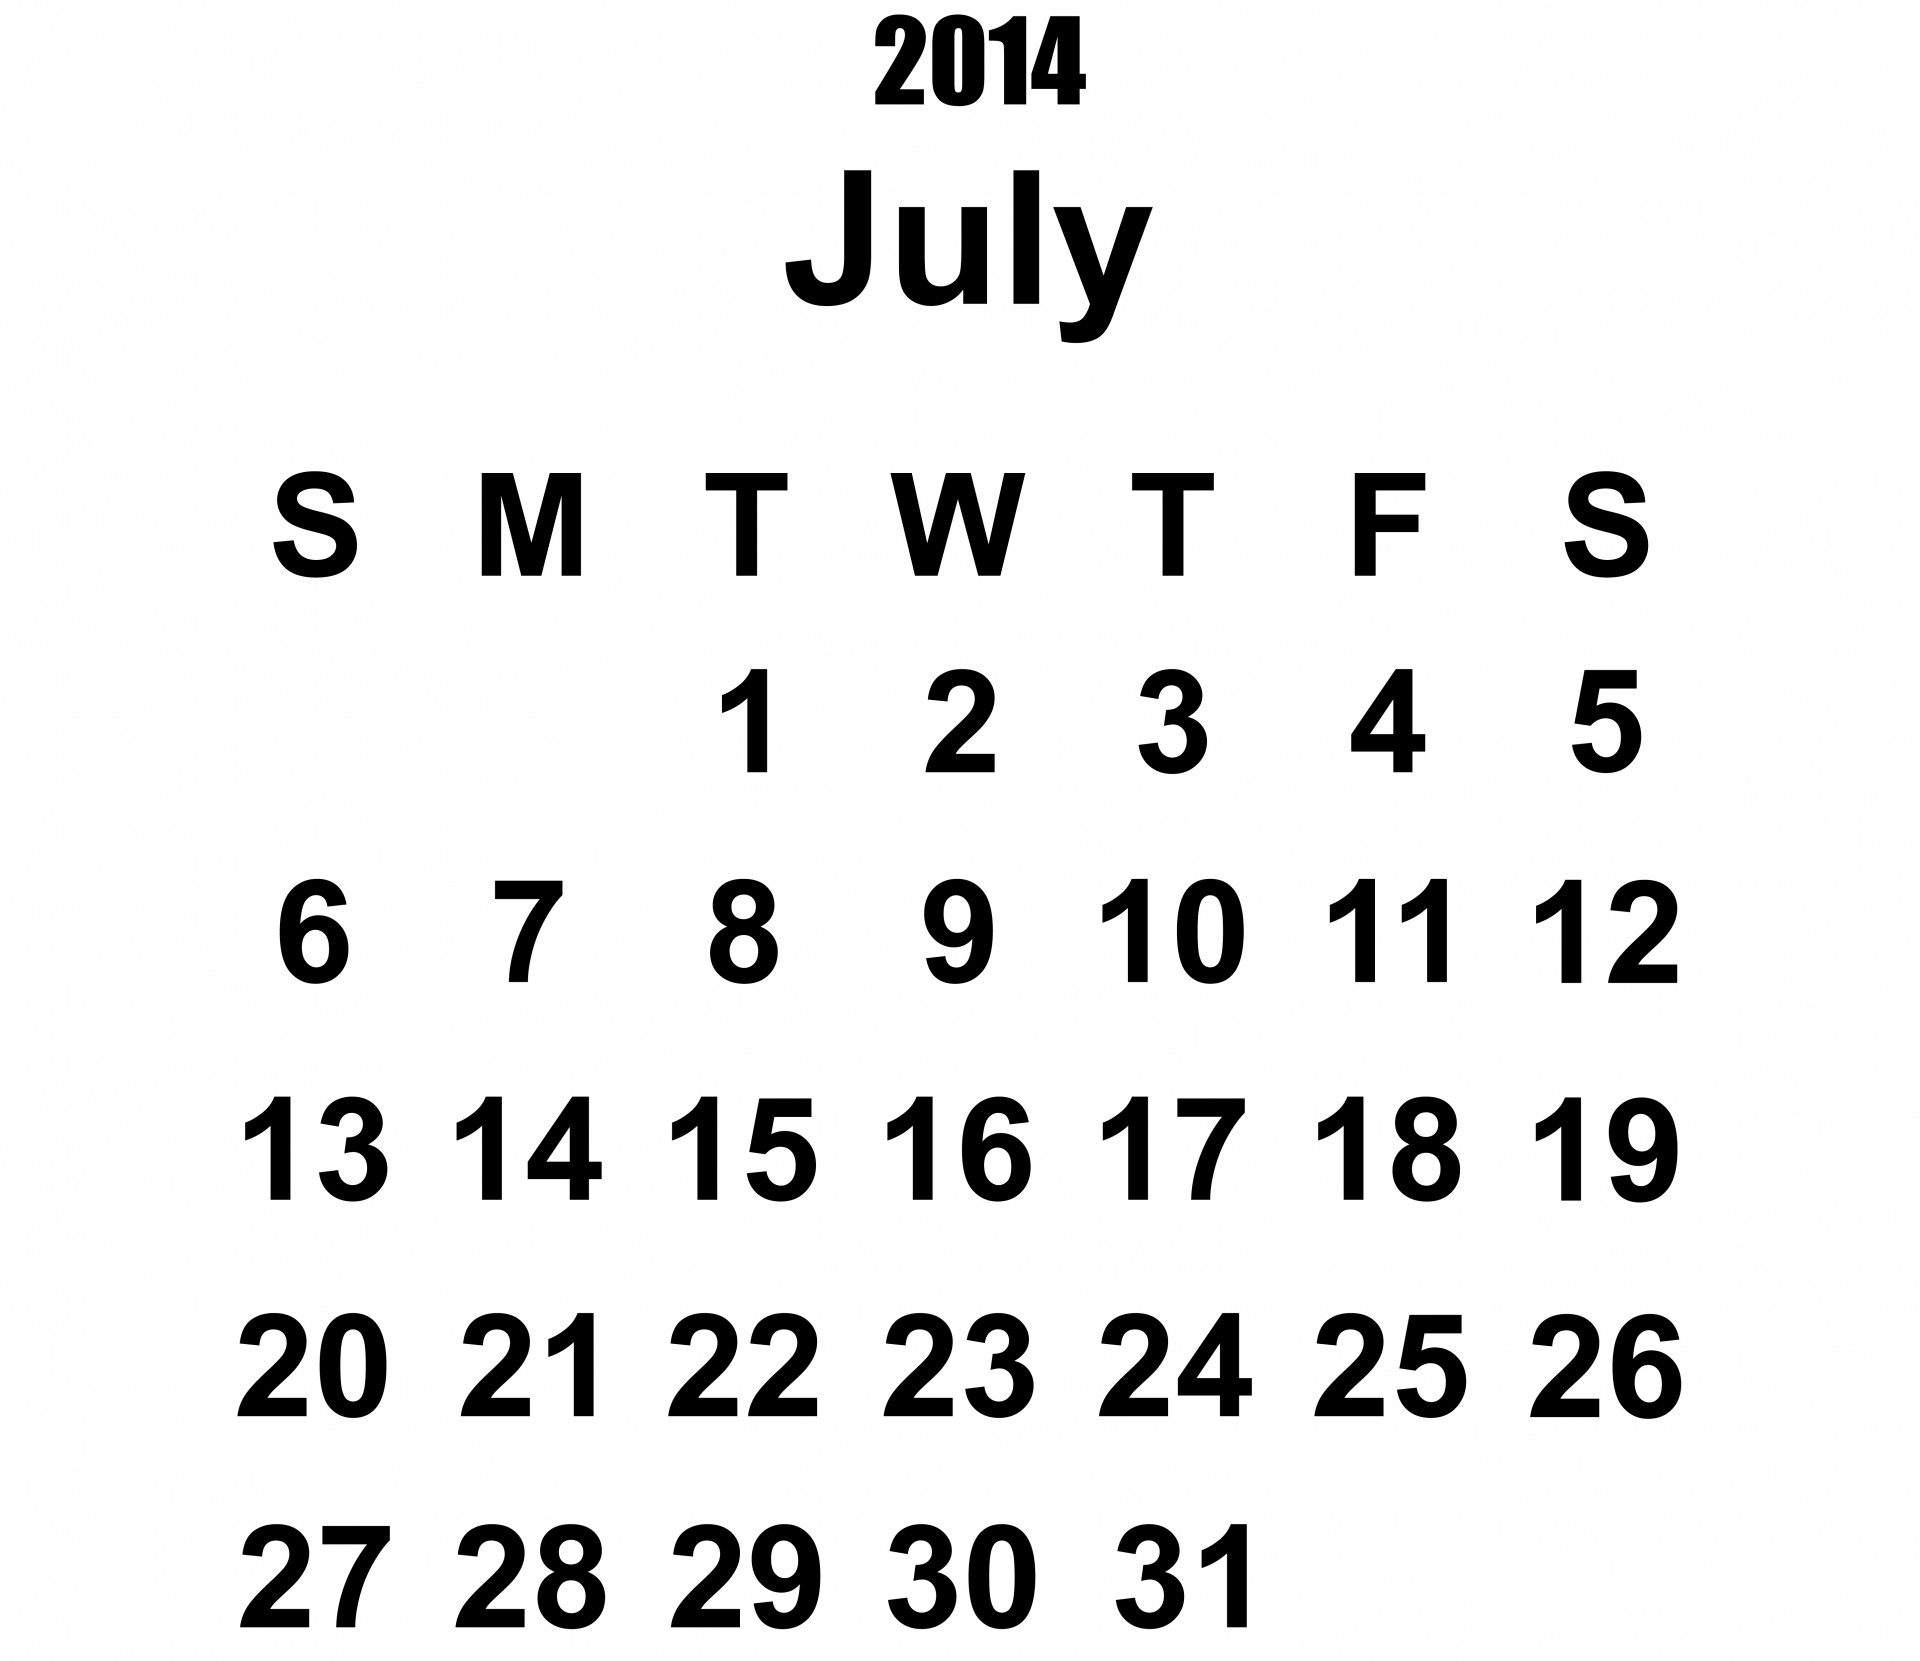 2014 calendar july 2014 calendar 2014 free photo